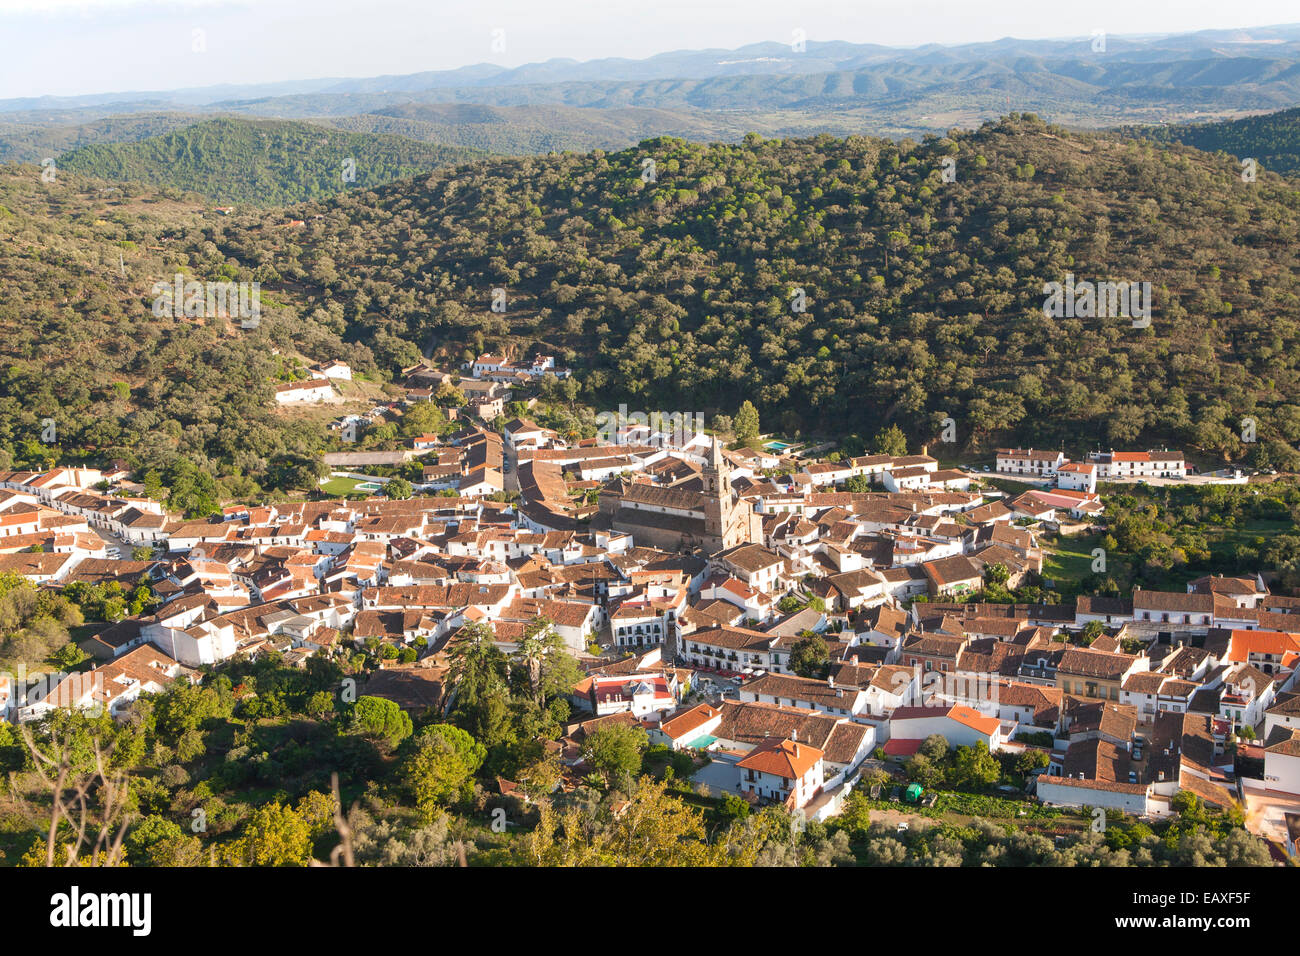 Overhead oblique angle view of village of Alajar, Sierra de Aracena, Huelva province, Spain Stock Photo